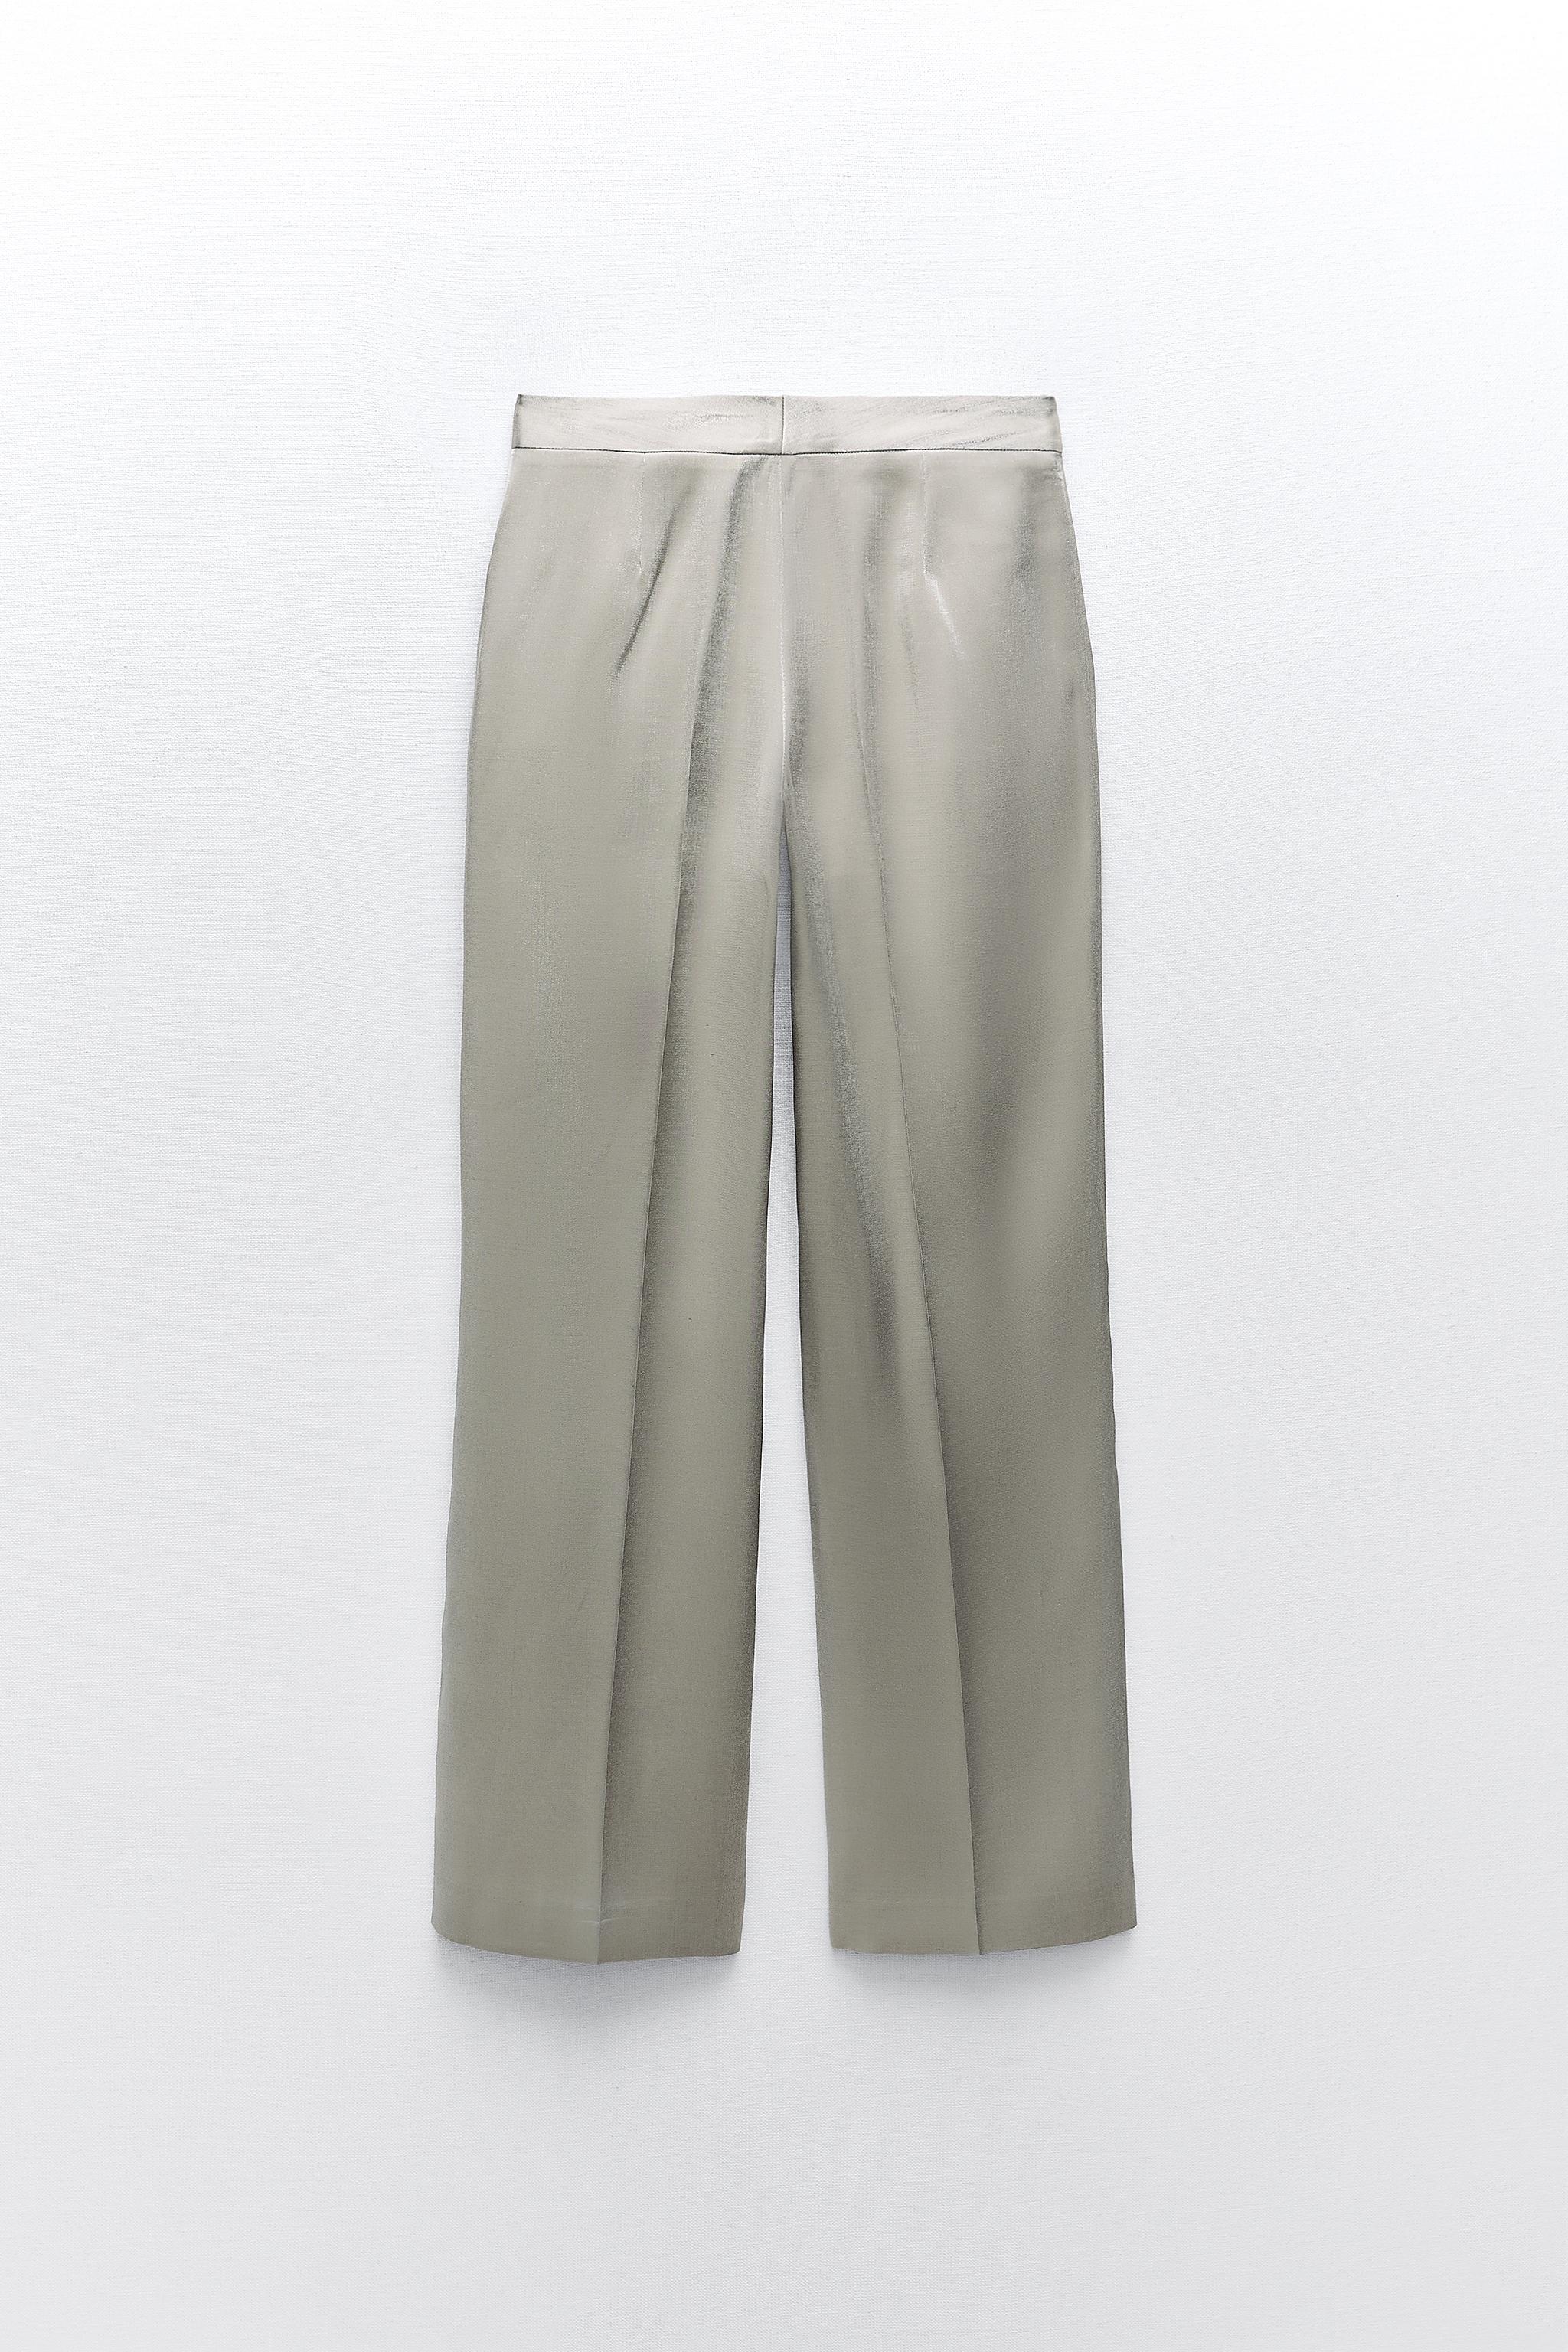 Halara Metallic Silver Casual Pants Size M - 67% off